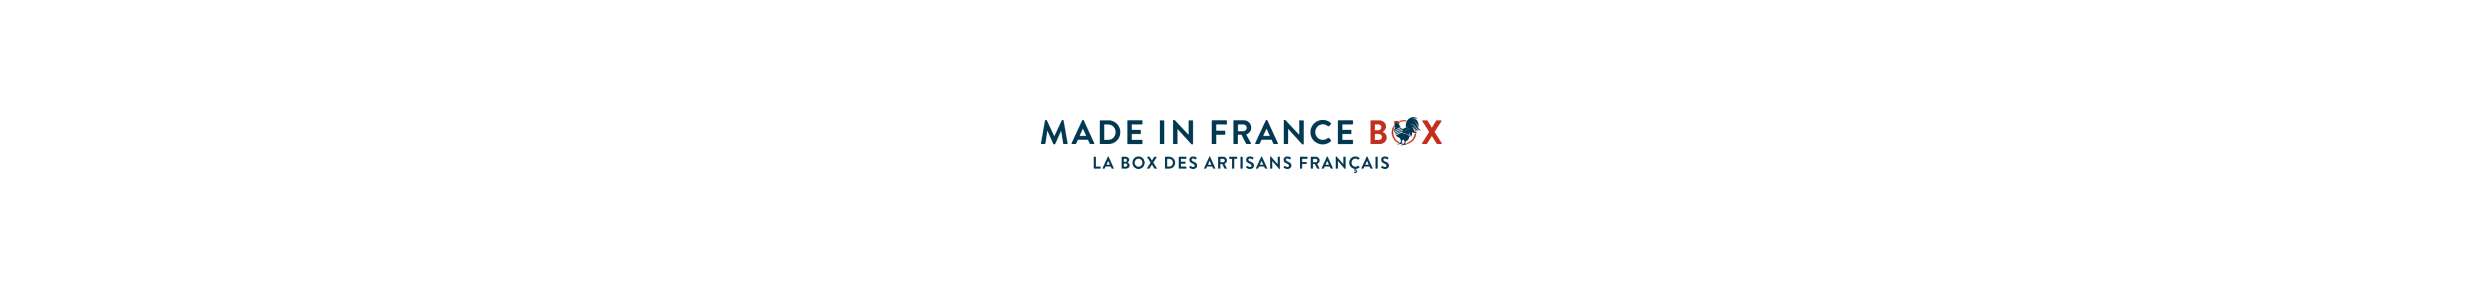 MADE IN FRANCE BOX logo